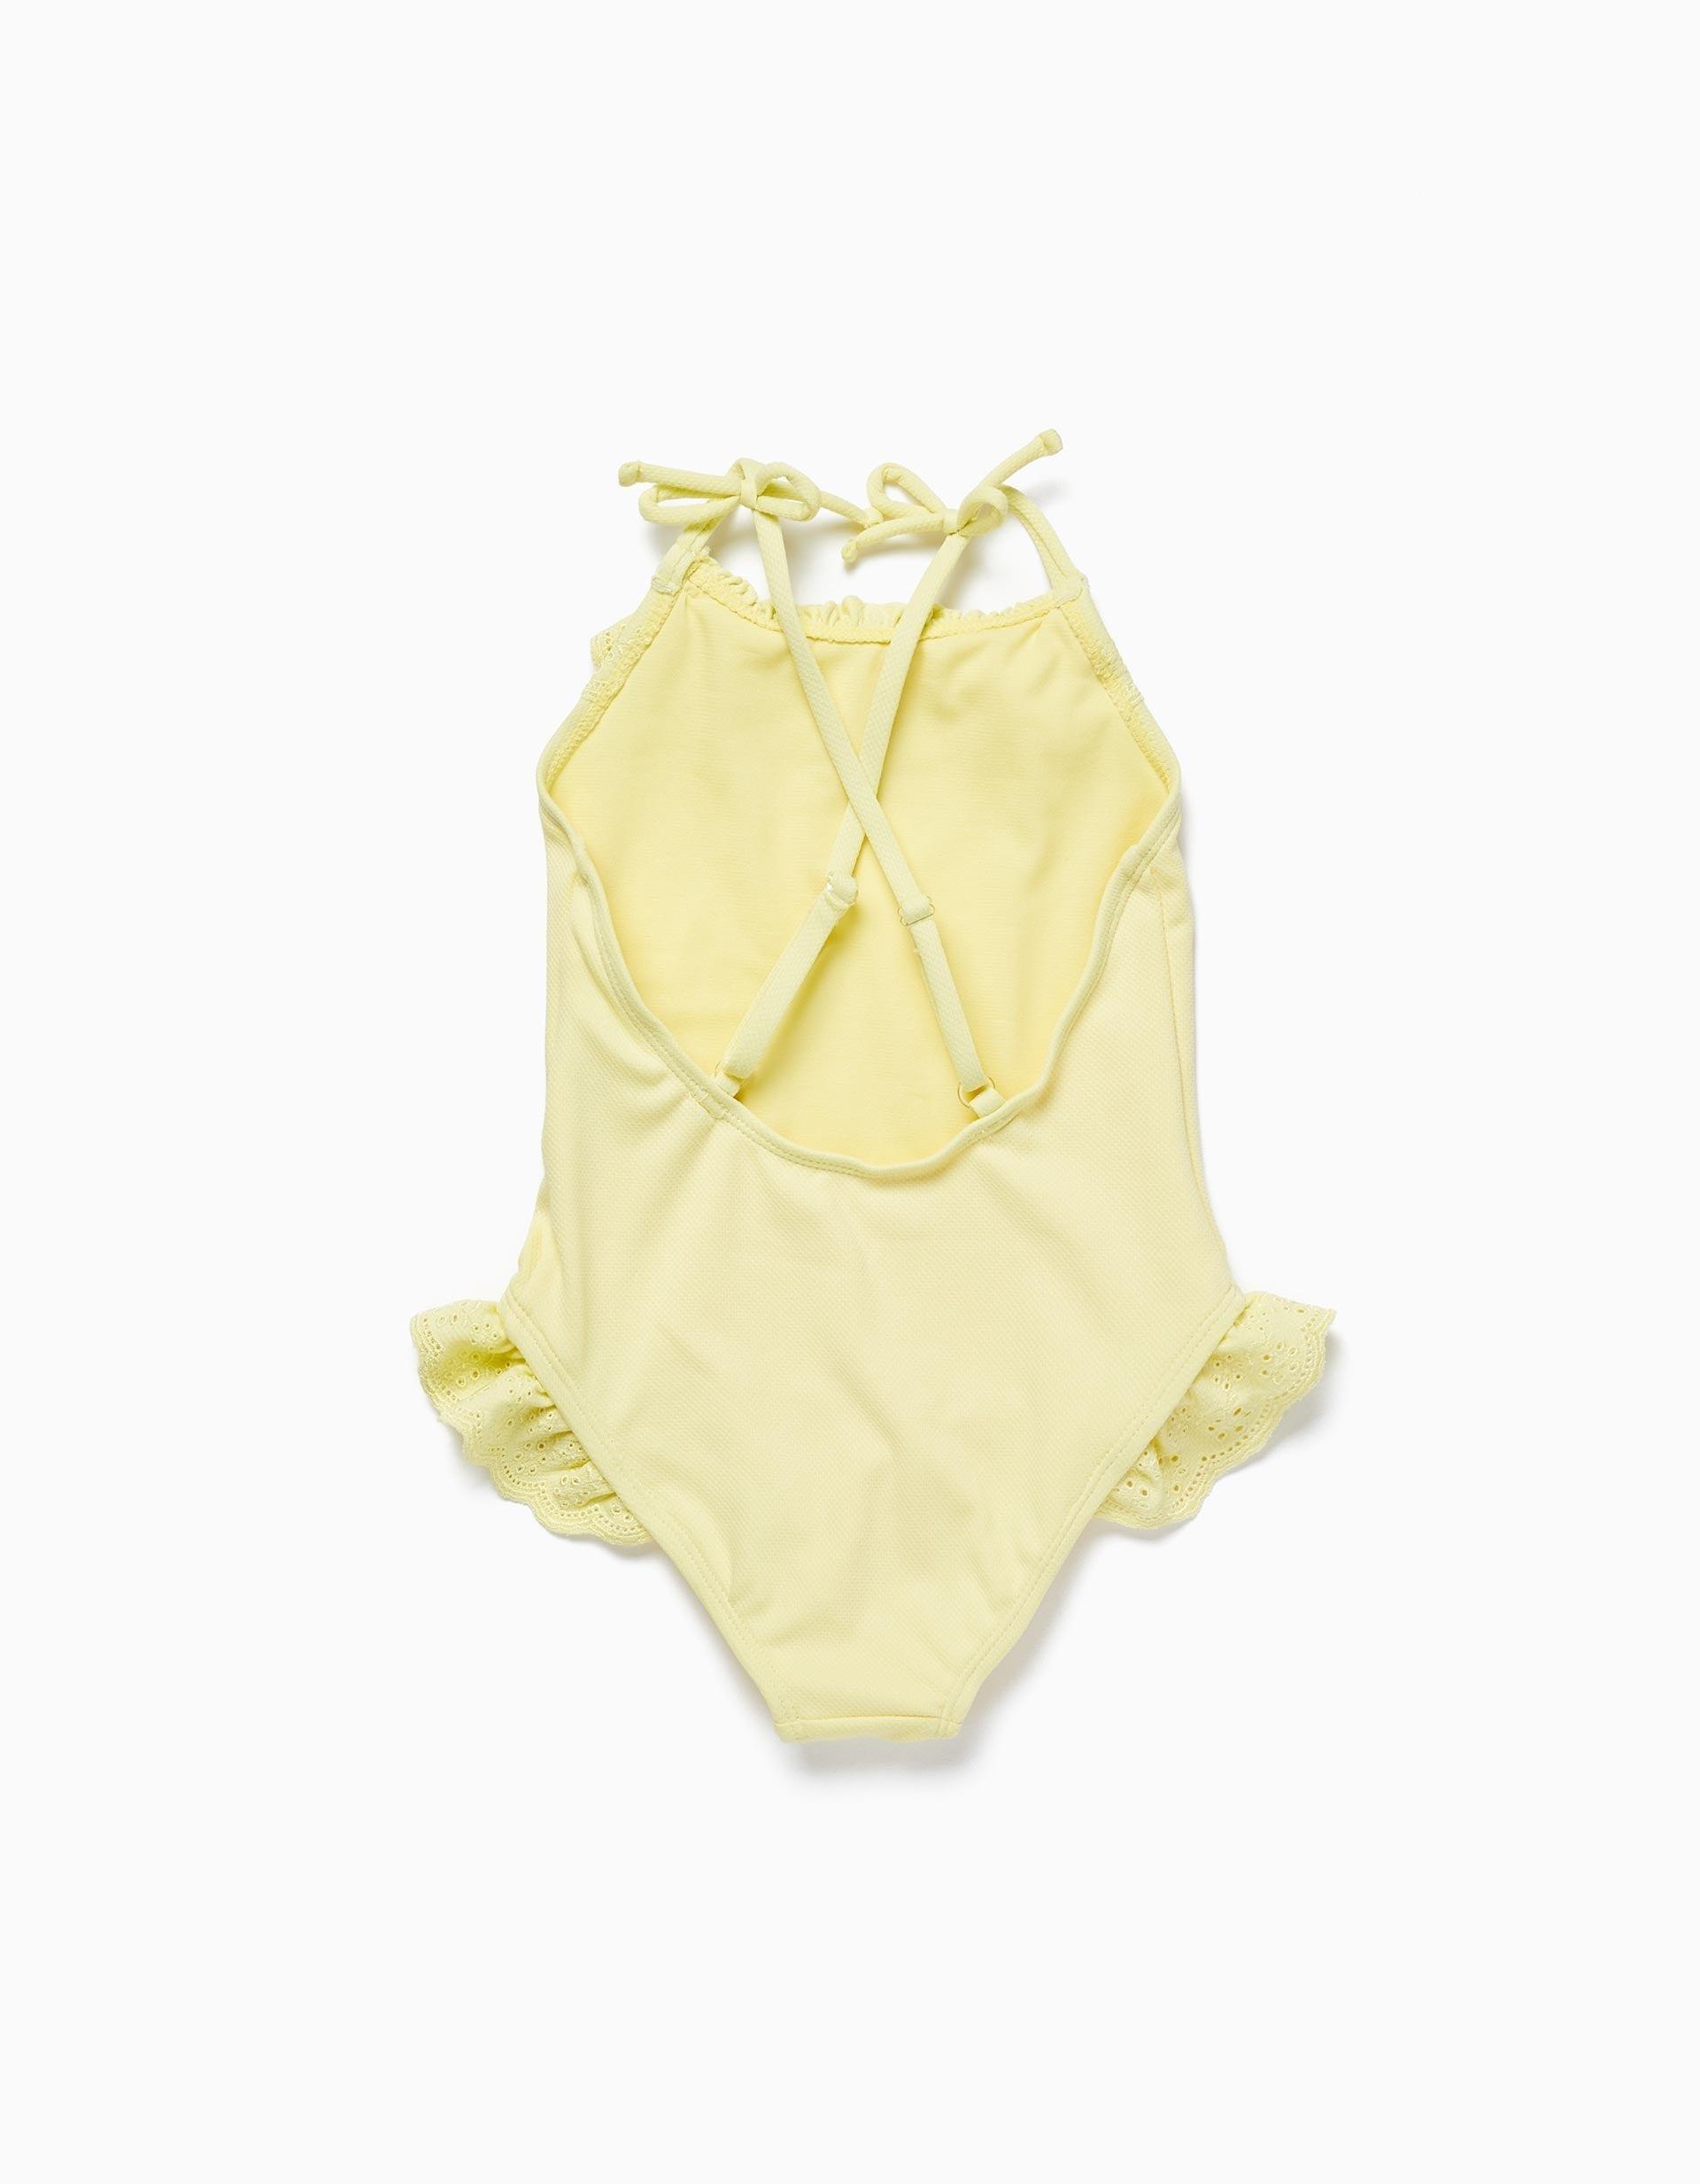 Zippy - Yellow Embroidered Swimsuit, Kids Girls